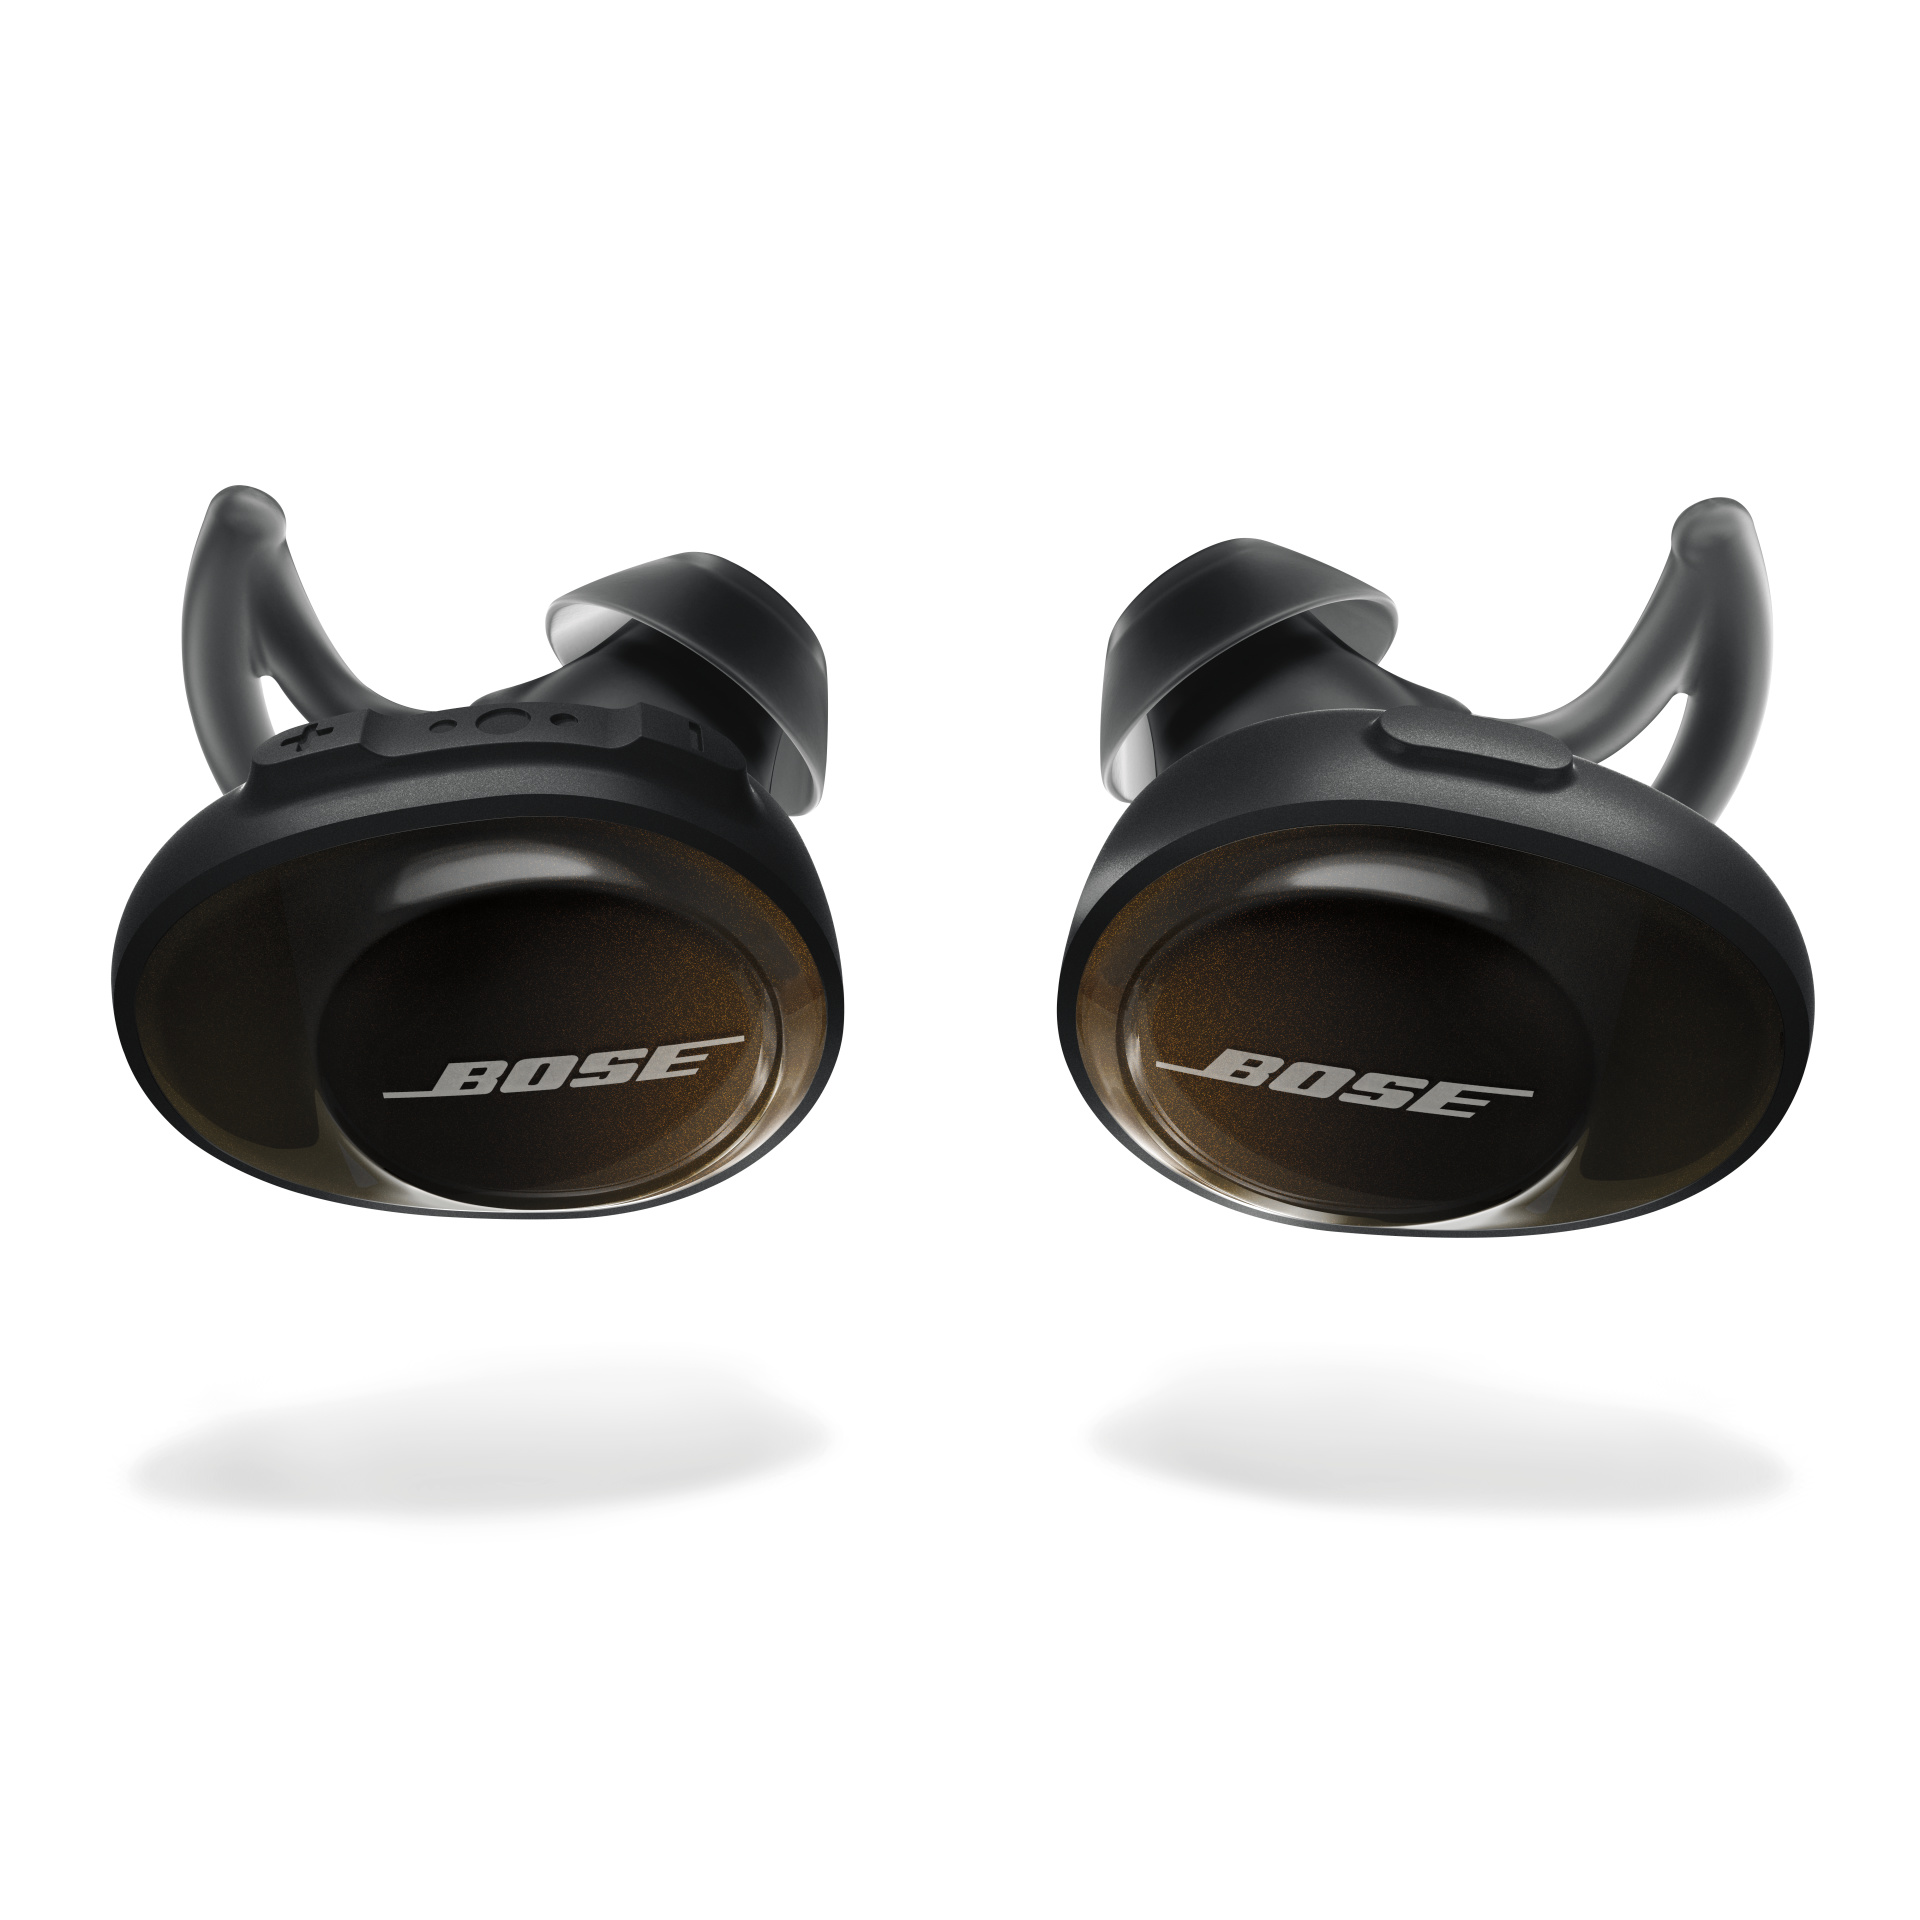 Restored Bose SoundSport Free Wireless Sport Headphones Black 7743730010 (Refurbished) - image 4 of 7